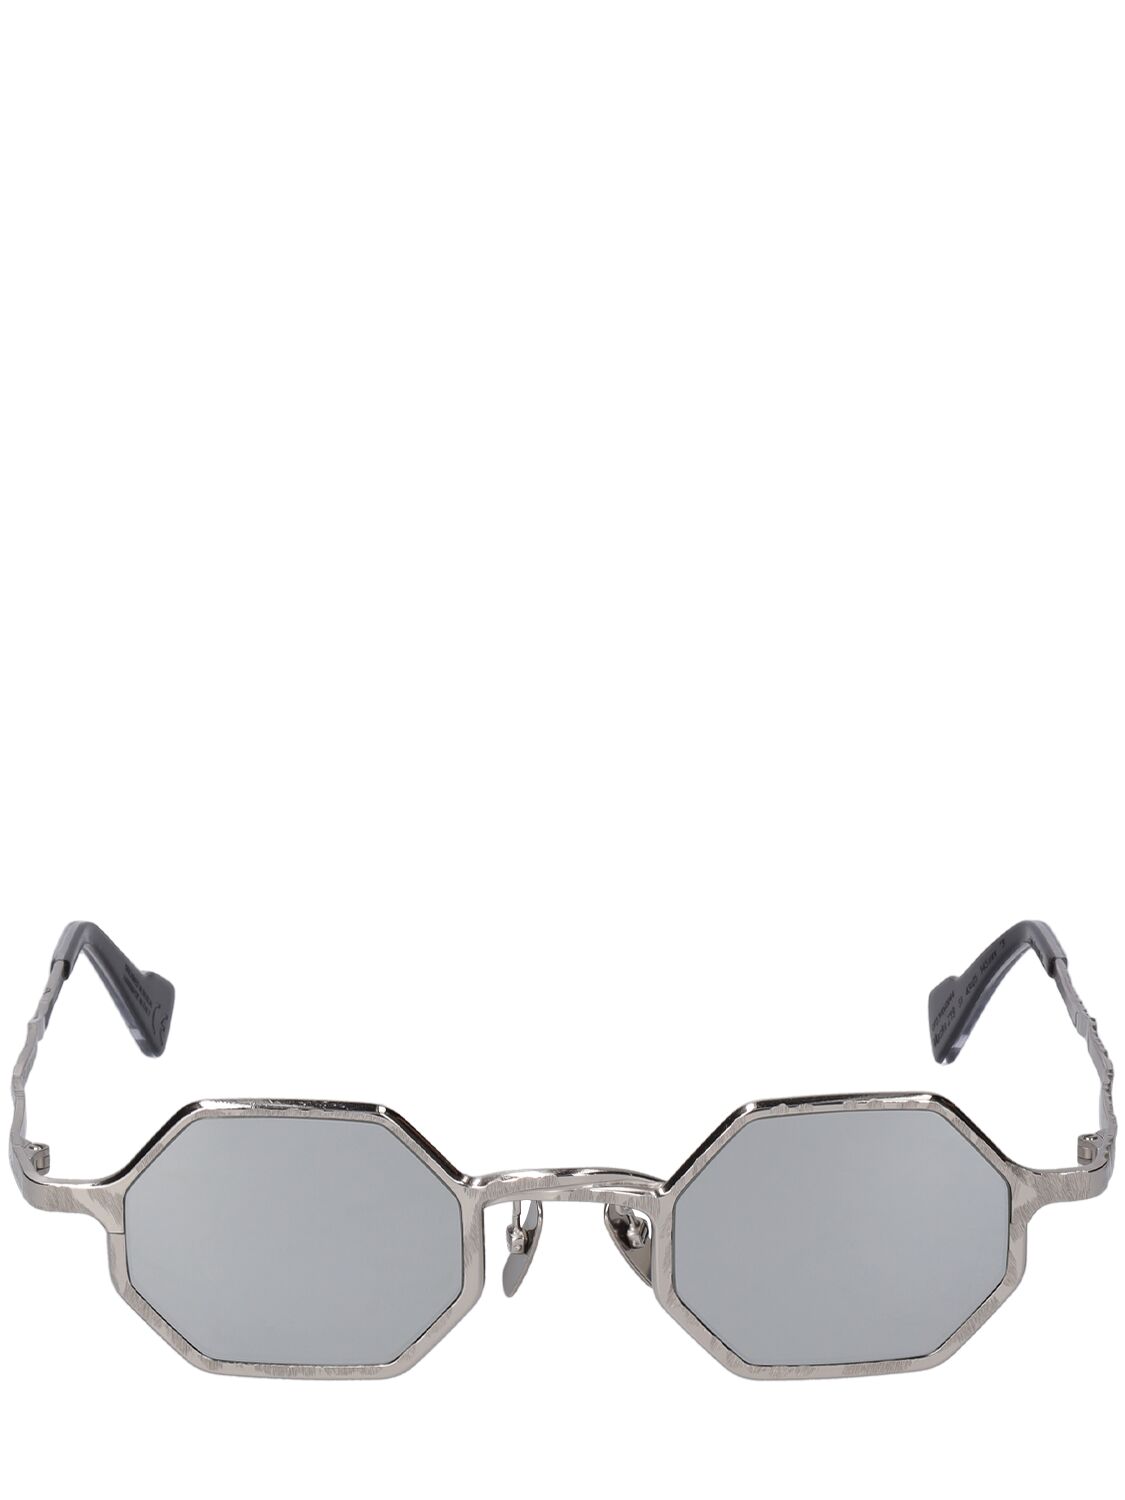 Z19 Squared Metal Sunglasses